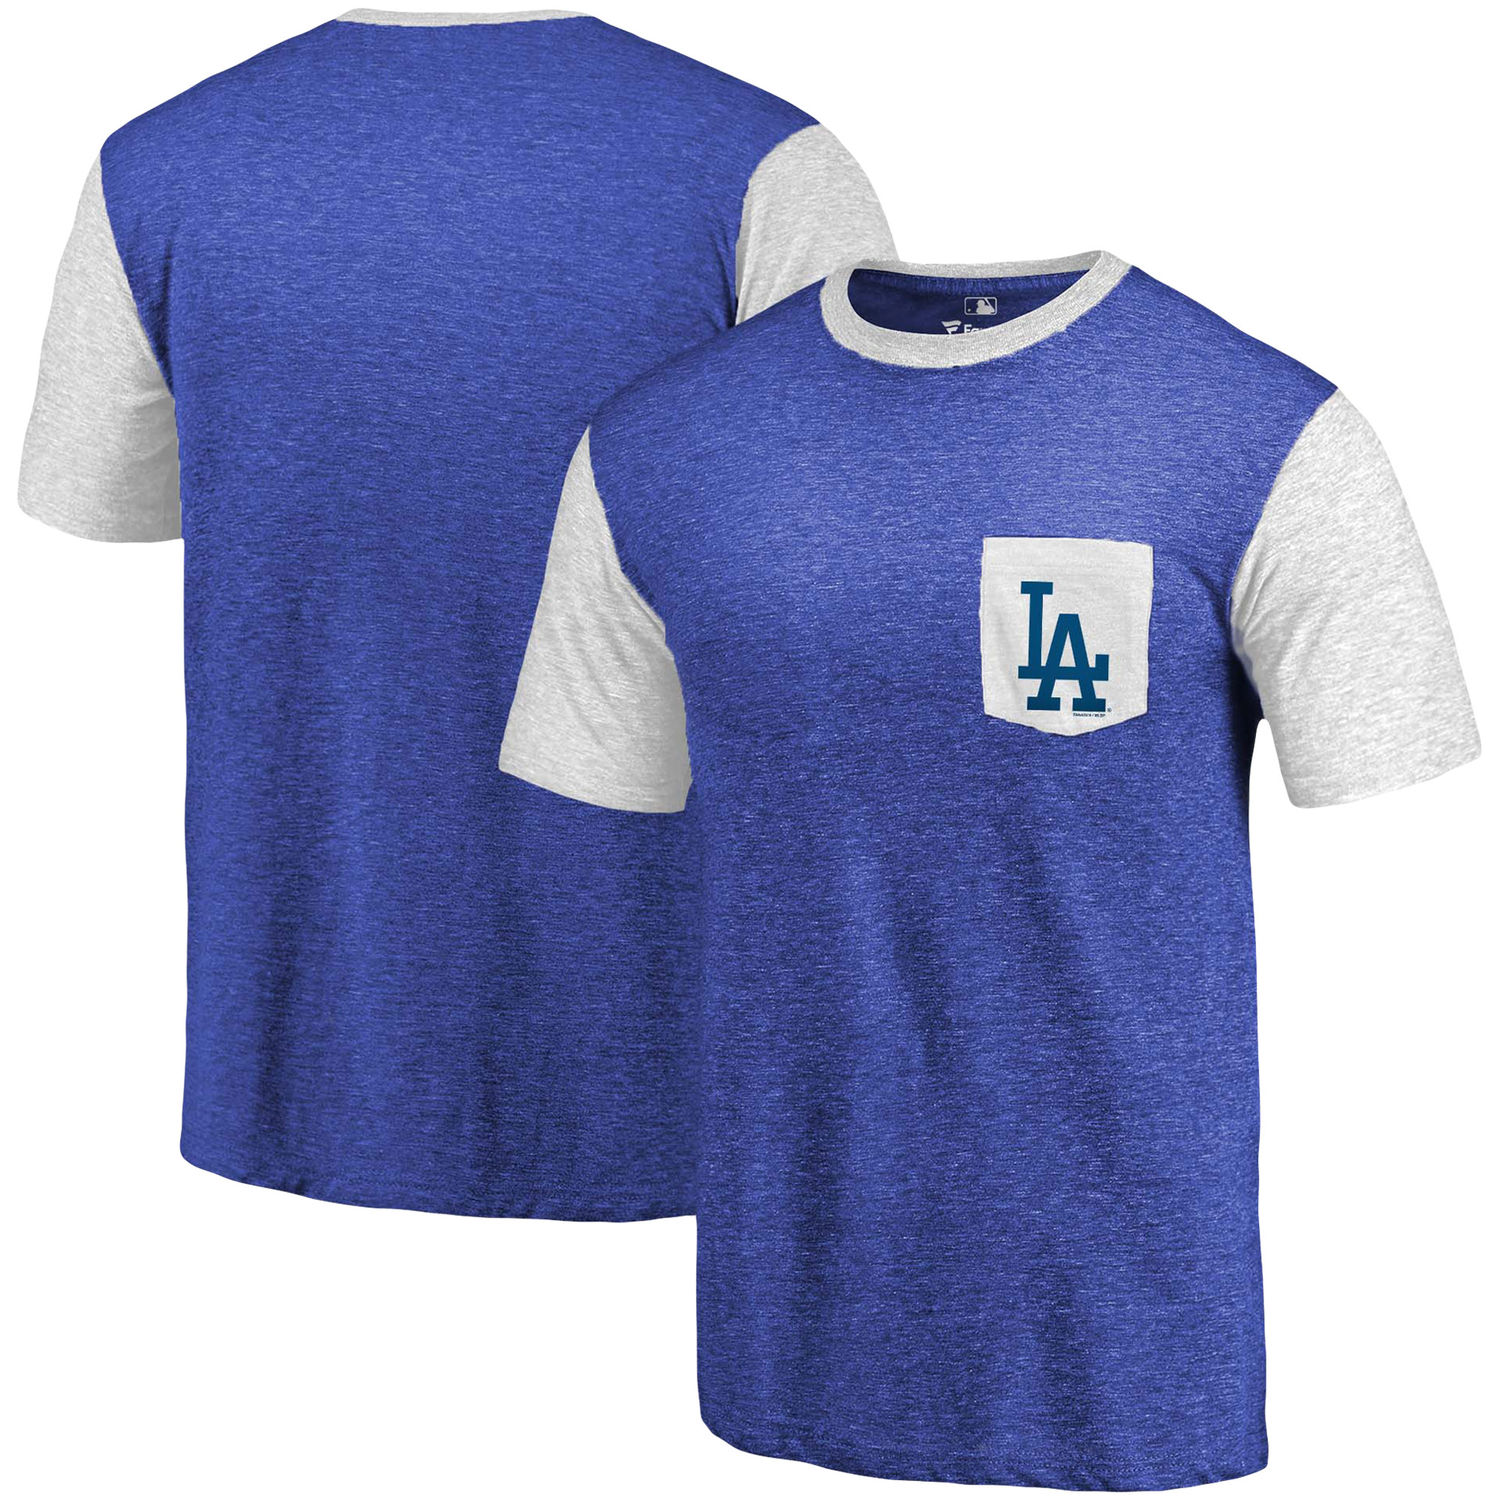 Men's Los Angeles Dodgers Fanatics Branded Royal/White Refresh Pocket T-Shirt